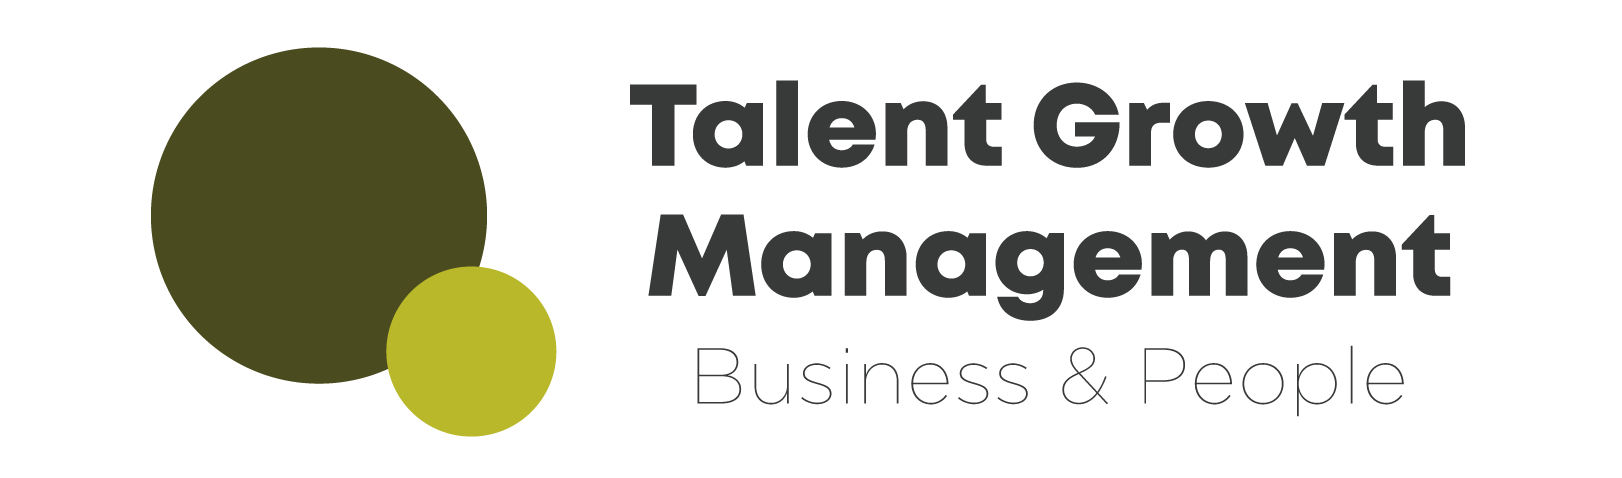 Talent Growth Managemet